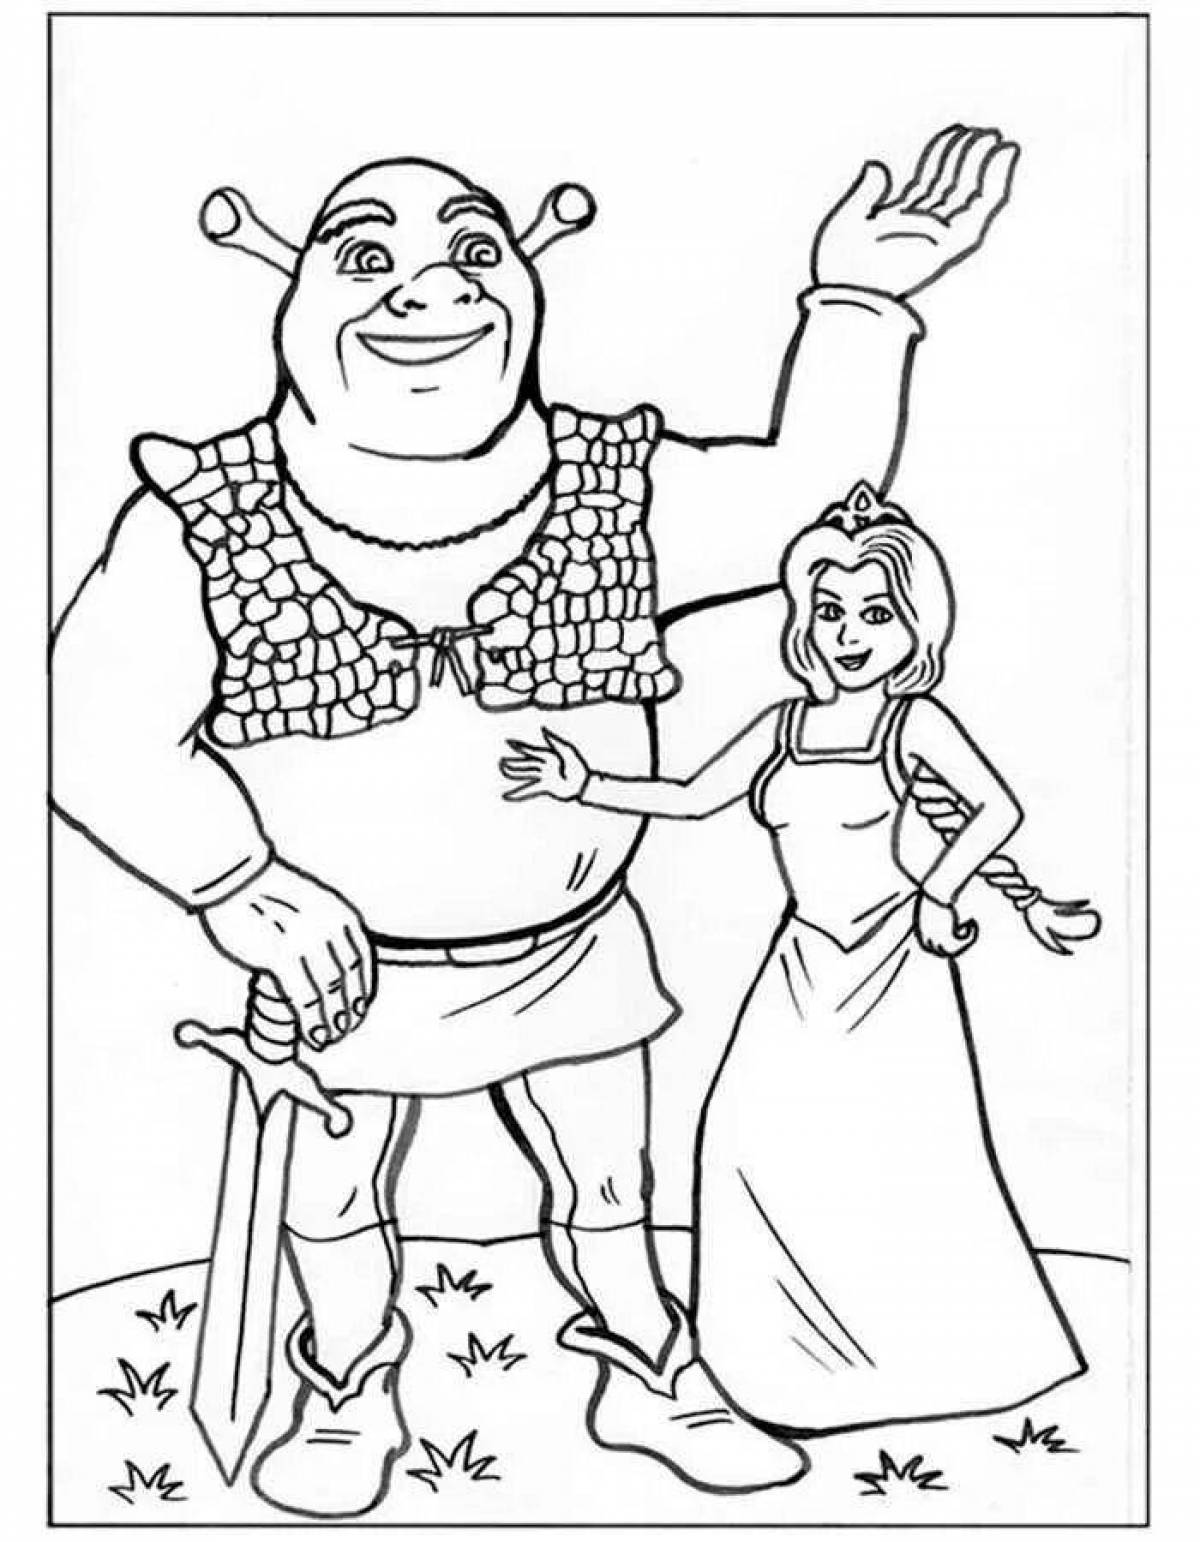 Shrek and Fiona #1